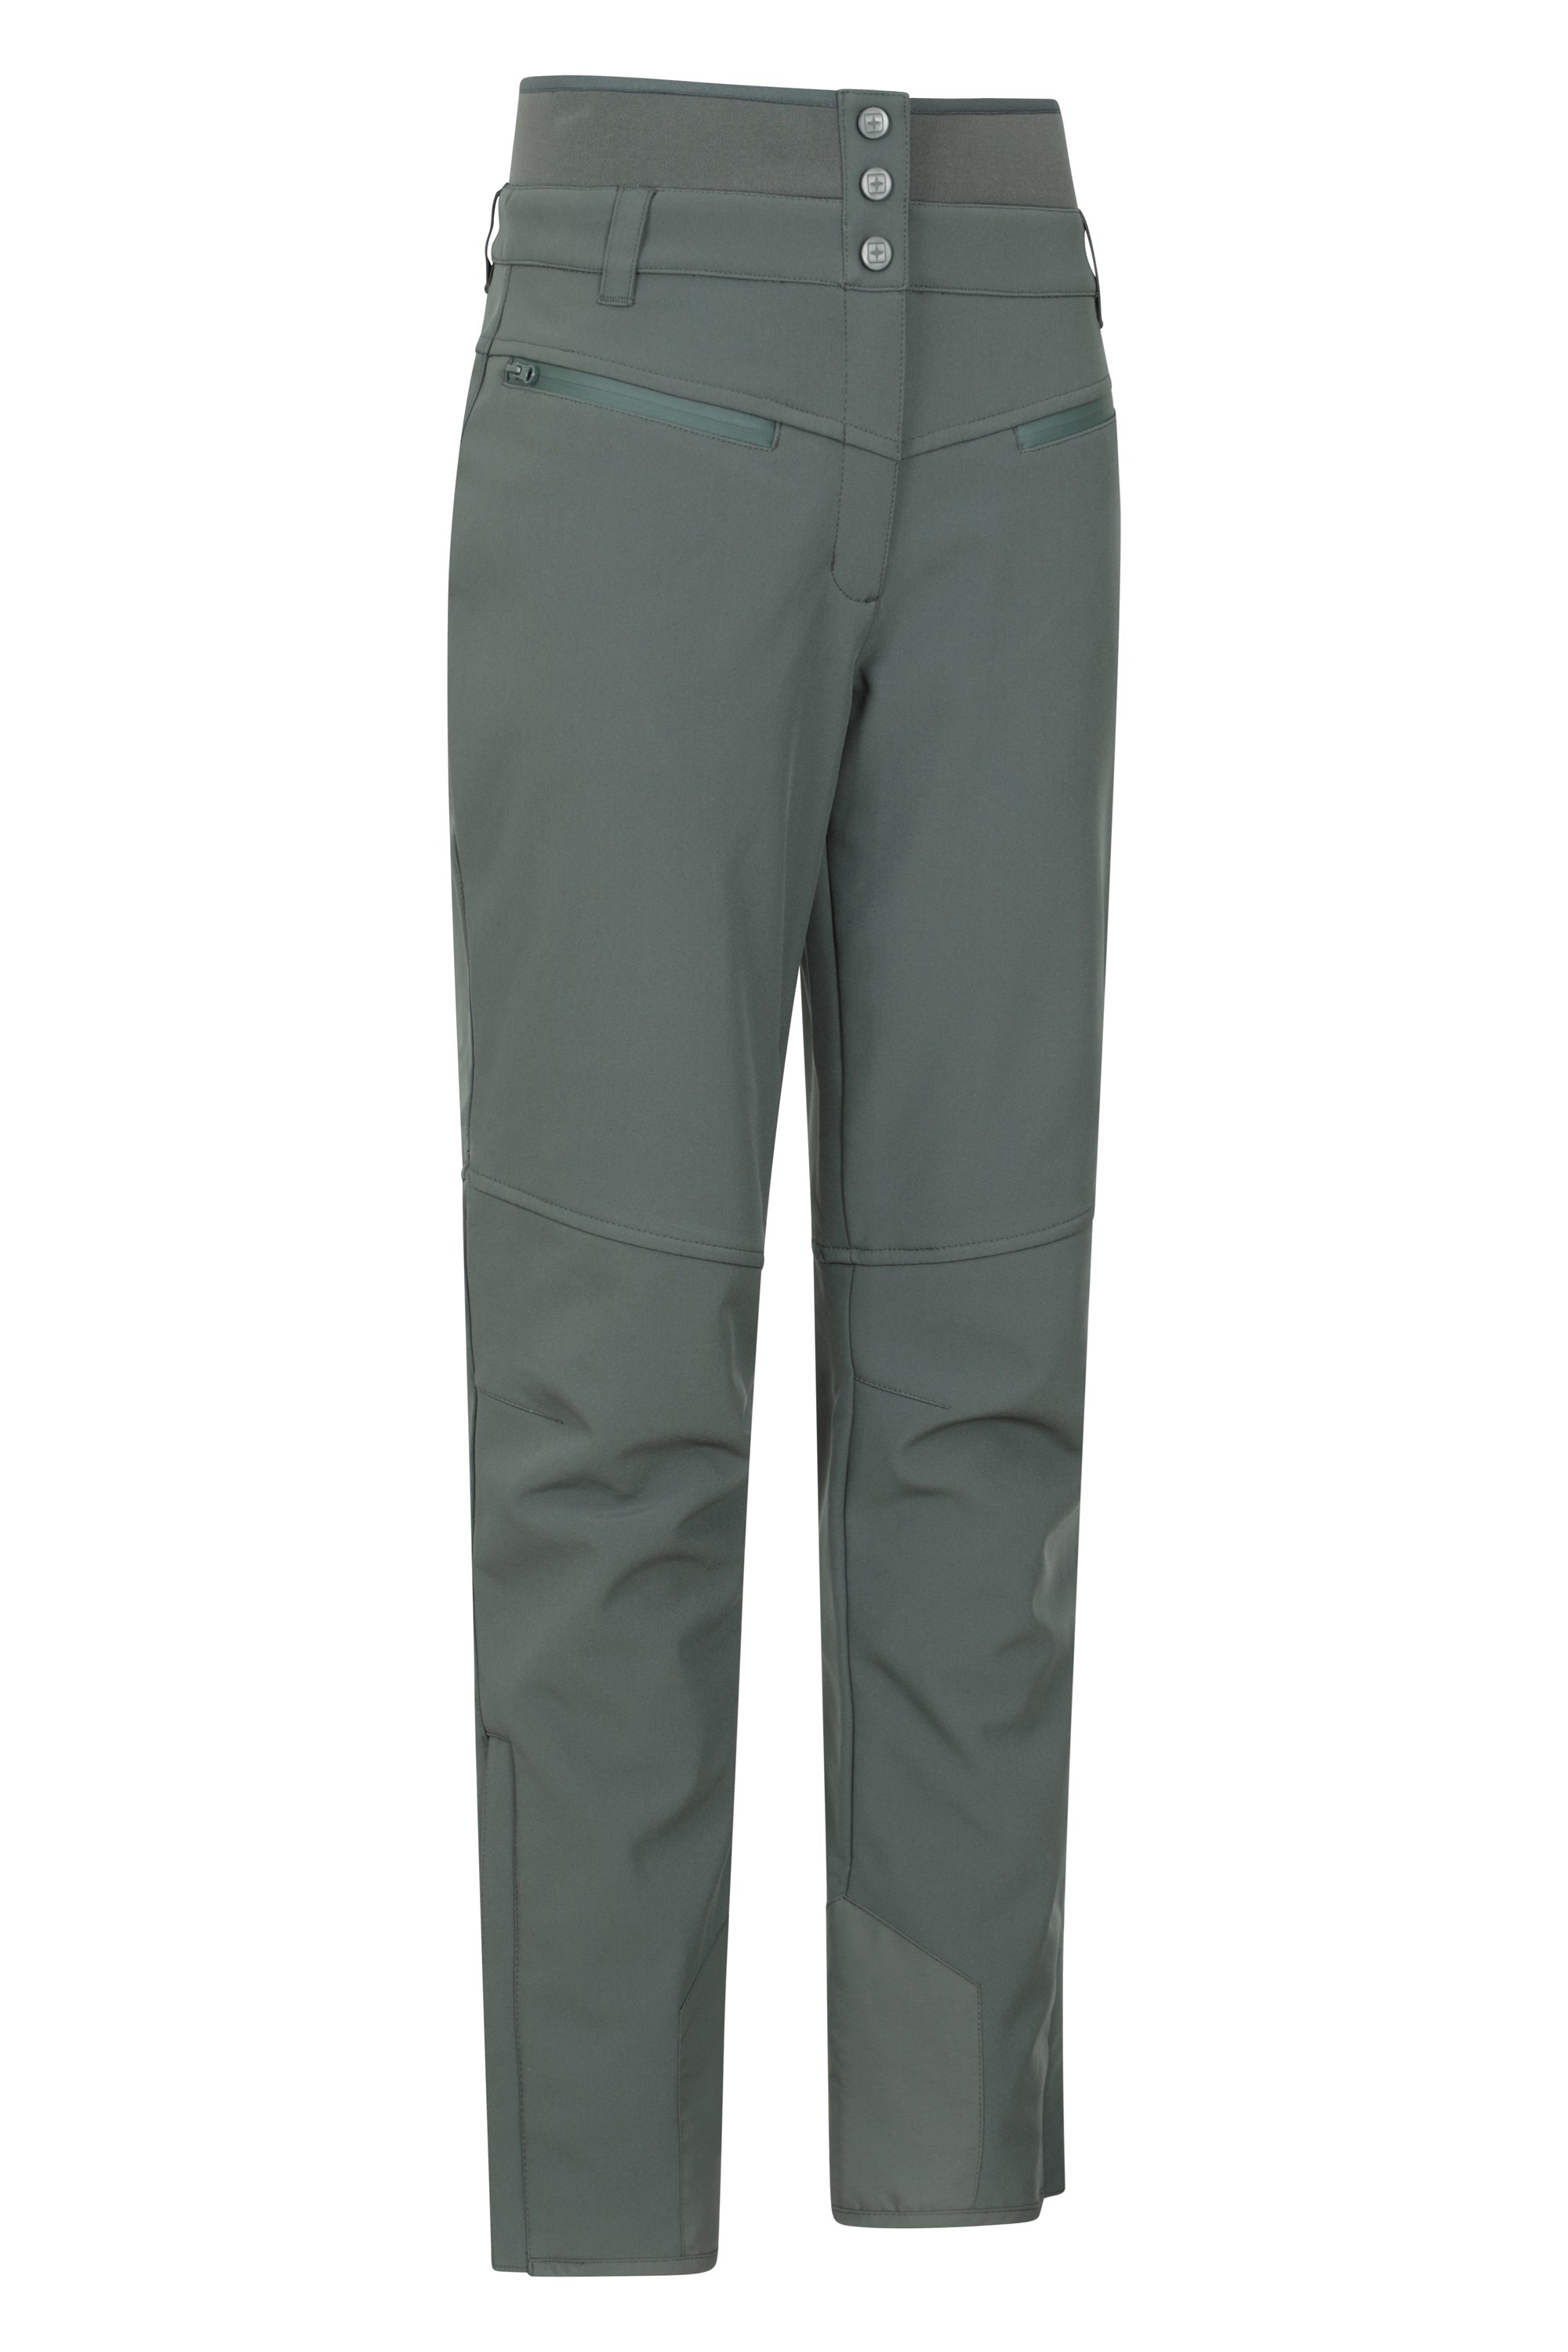 Isola II Extreme RECCO® pantalones de esquí impermeables para mujer